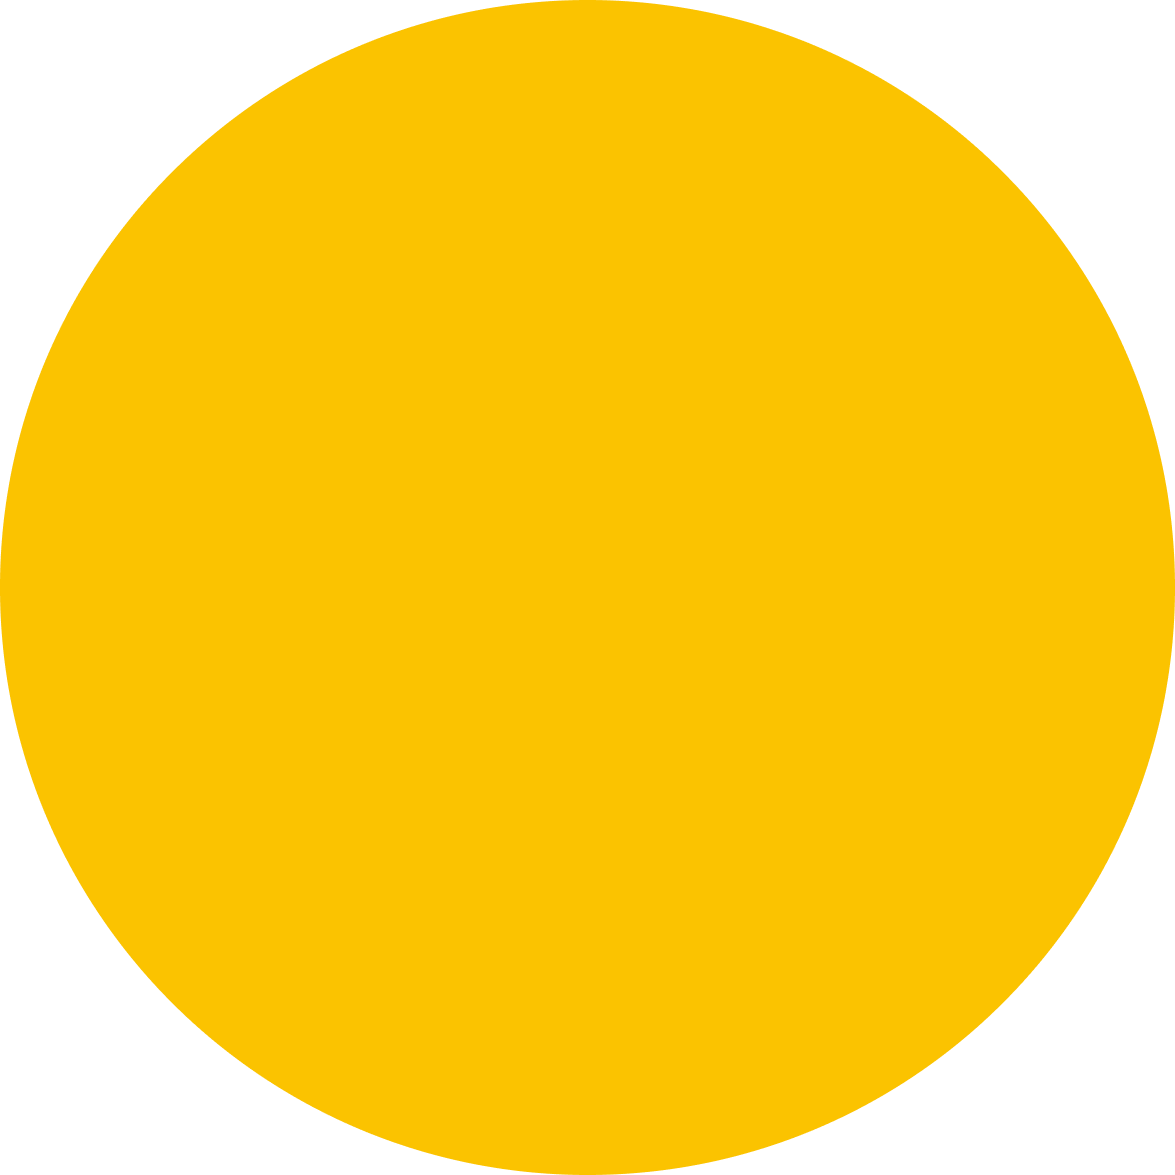 faq-page-yellow-circle